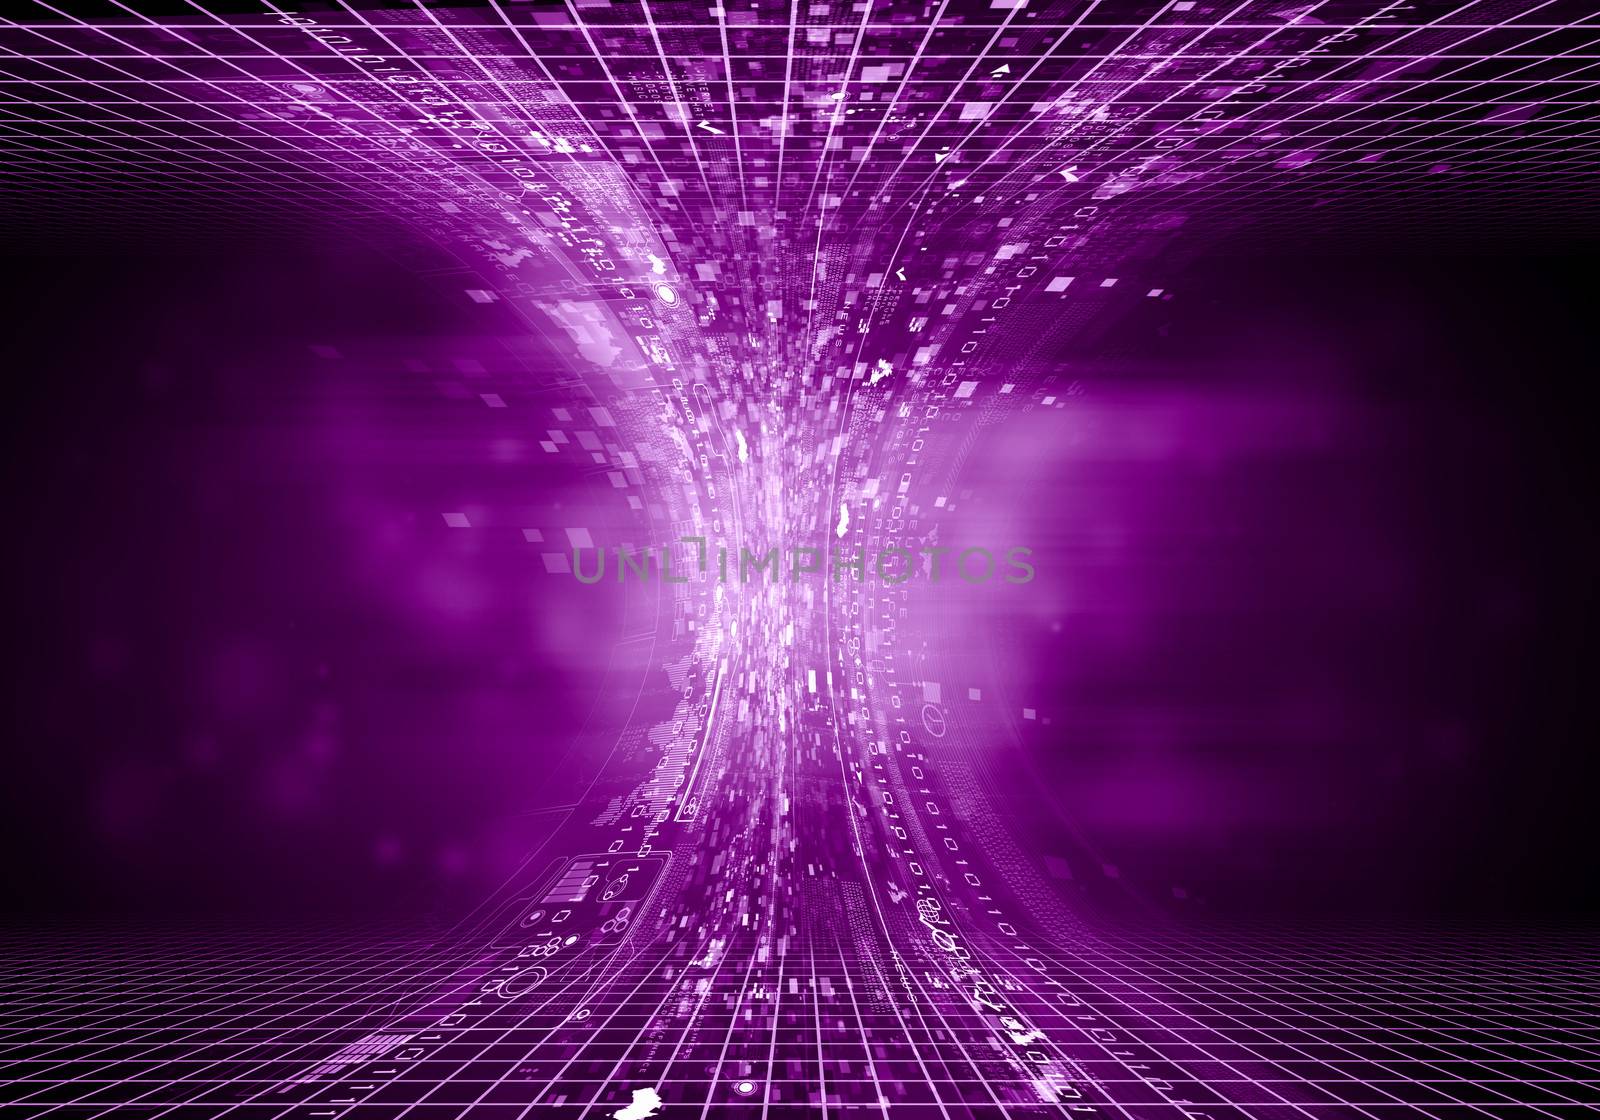 Purple digital funnel against dark background. Technology concept